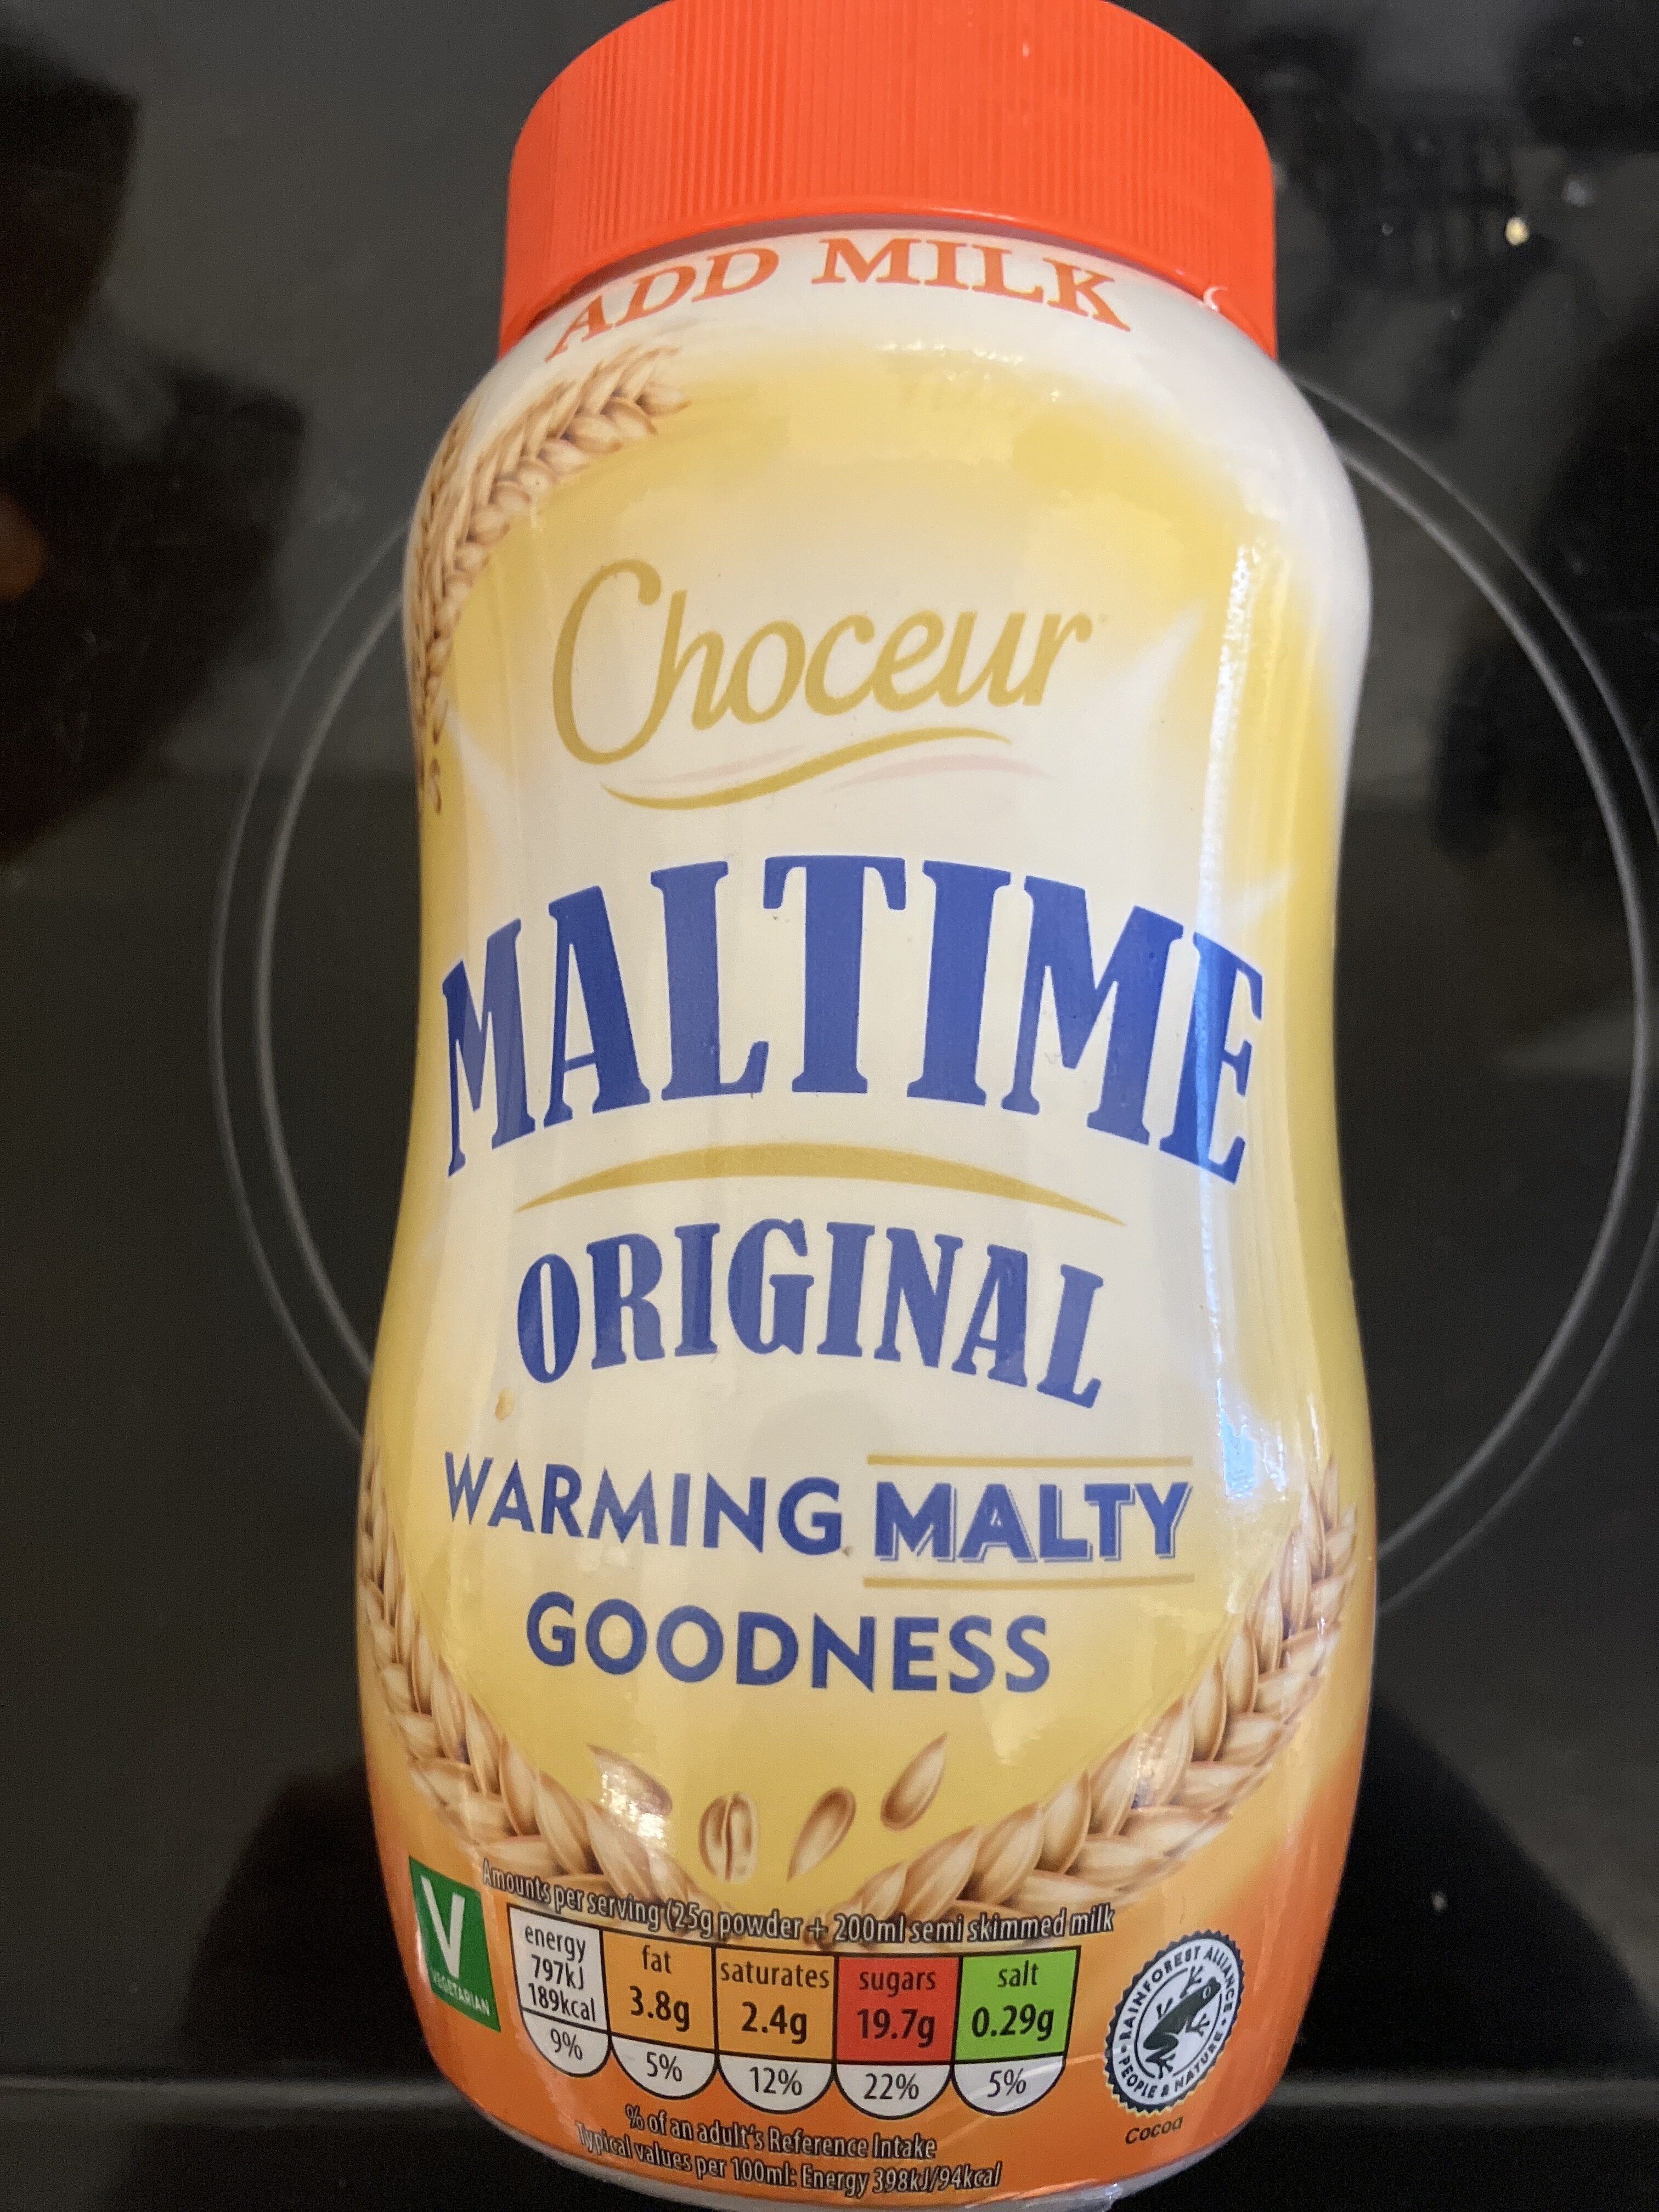 Maltime Original - Product